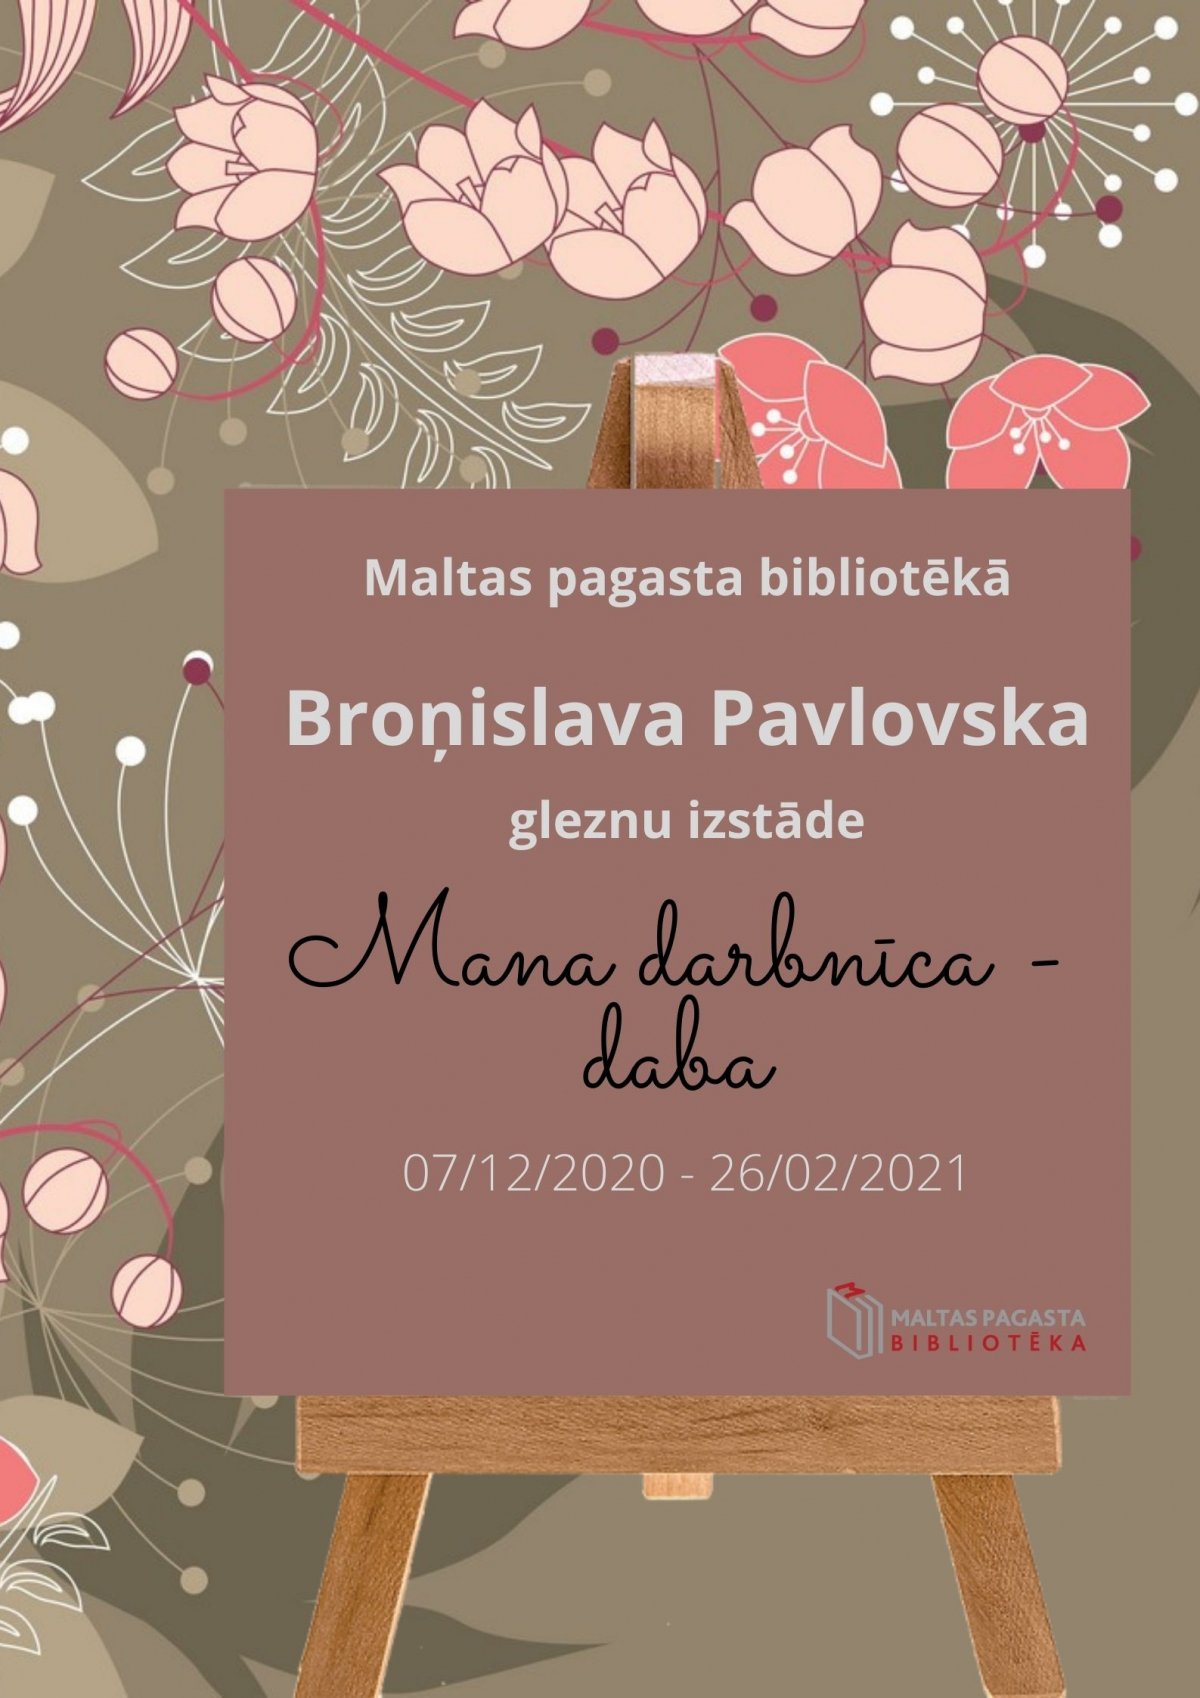 Broņislava Pavlovska gleznu izstāde bibliotēkā